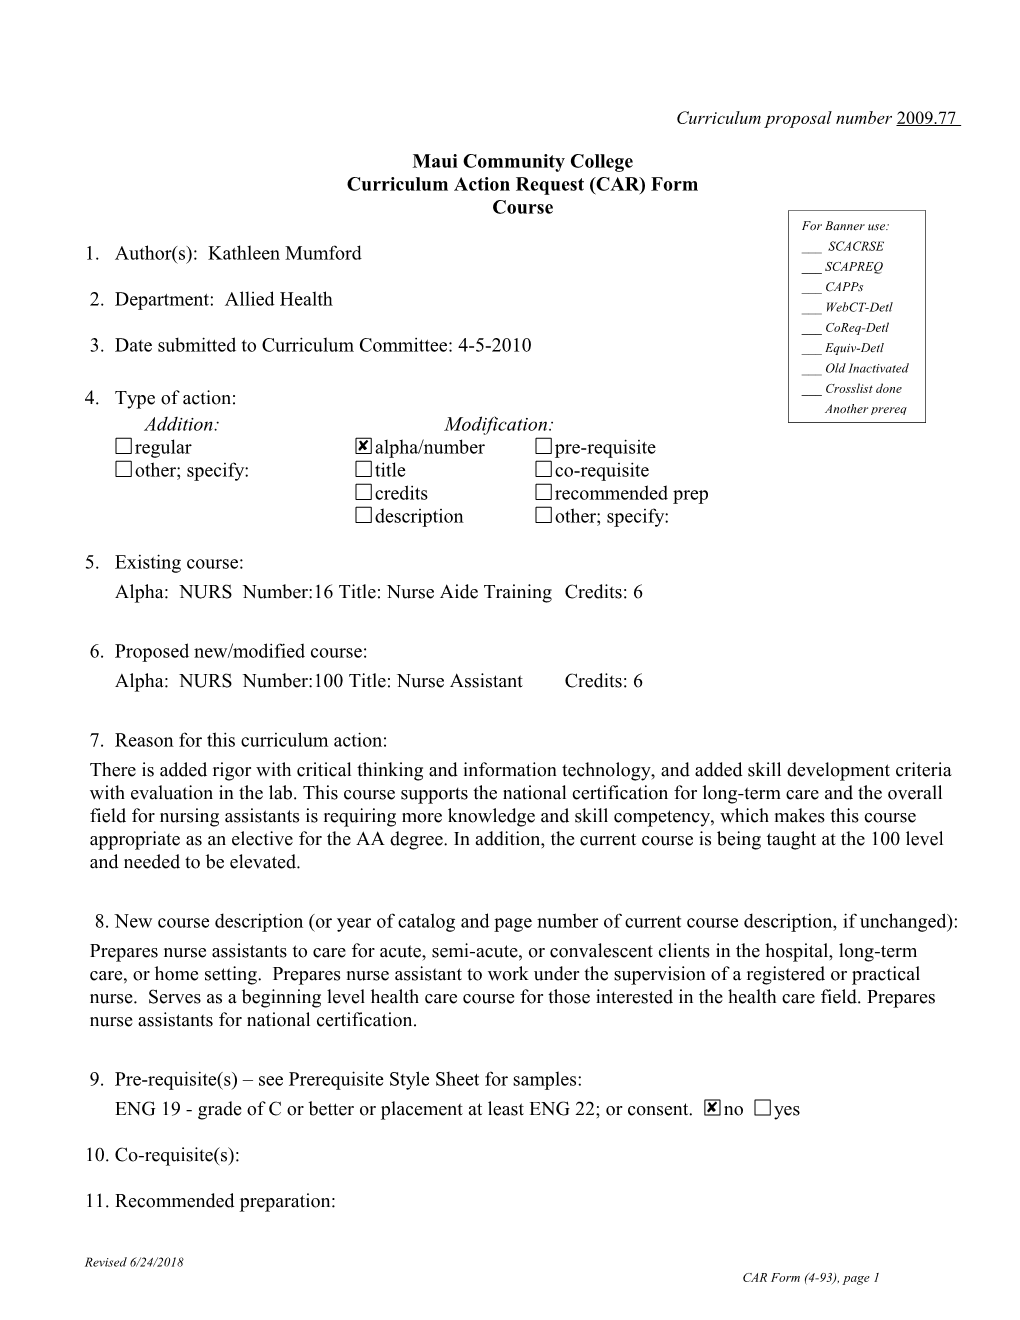 Curriculum Proposal Number 2009